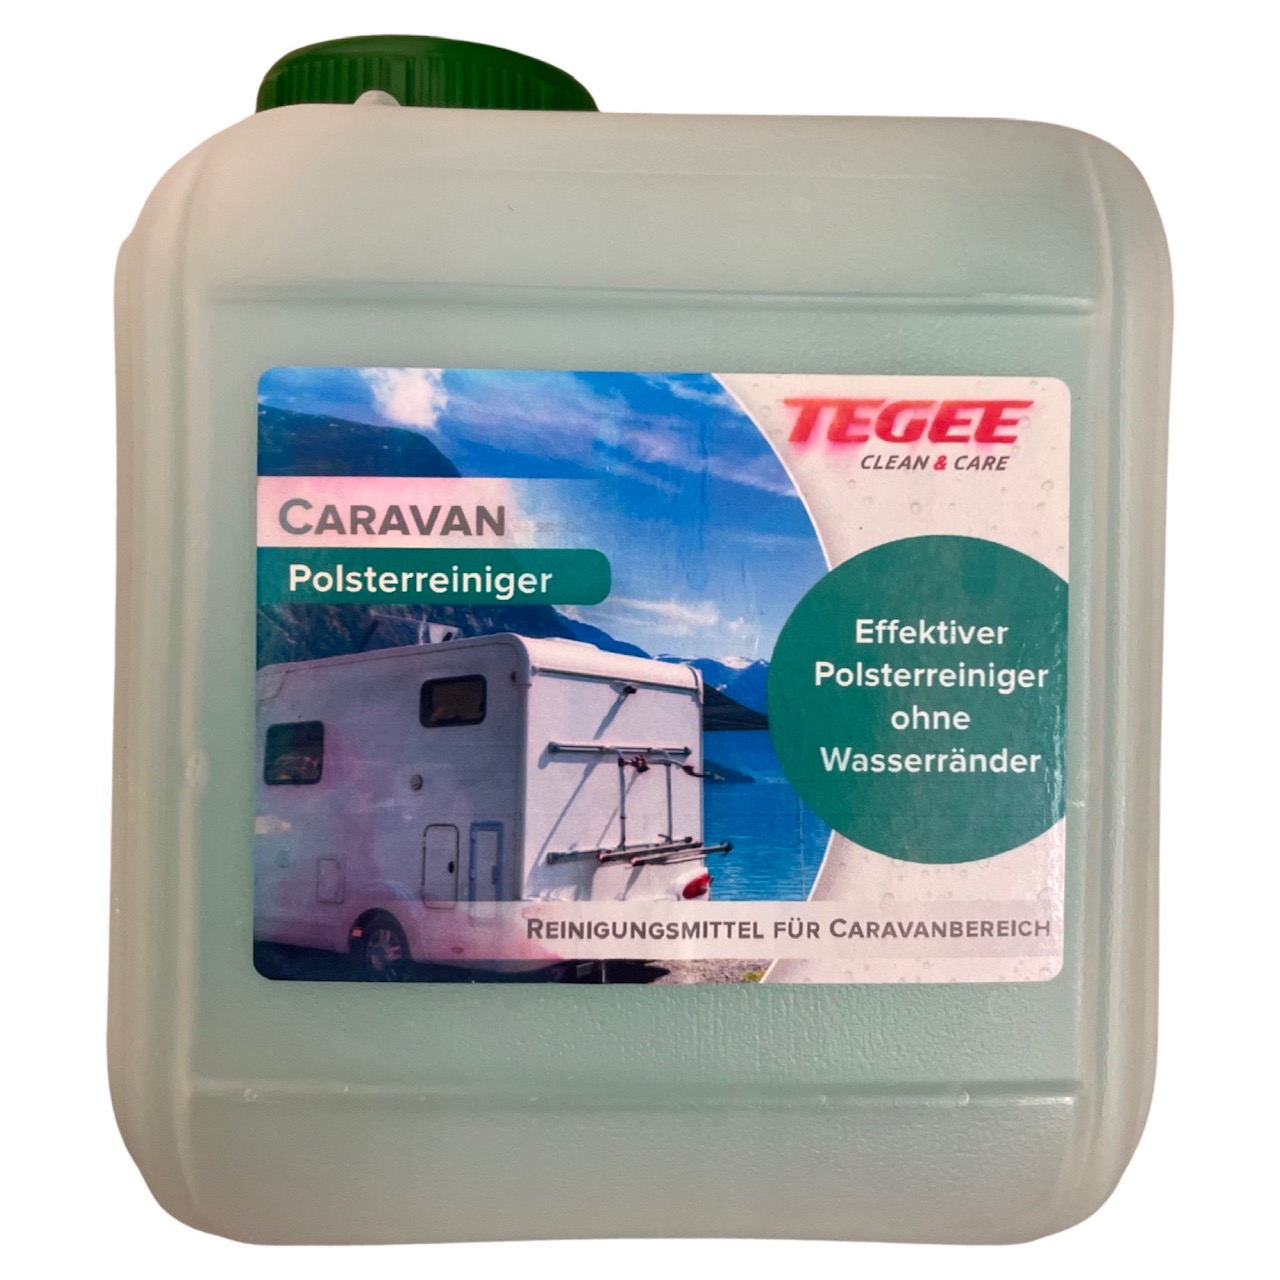 Tegee Caravan Polsterreiniger 1 Liter